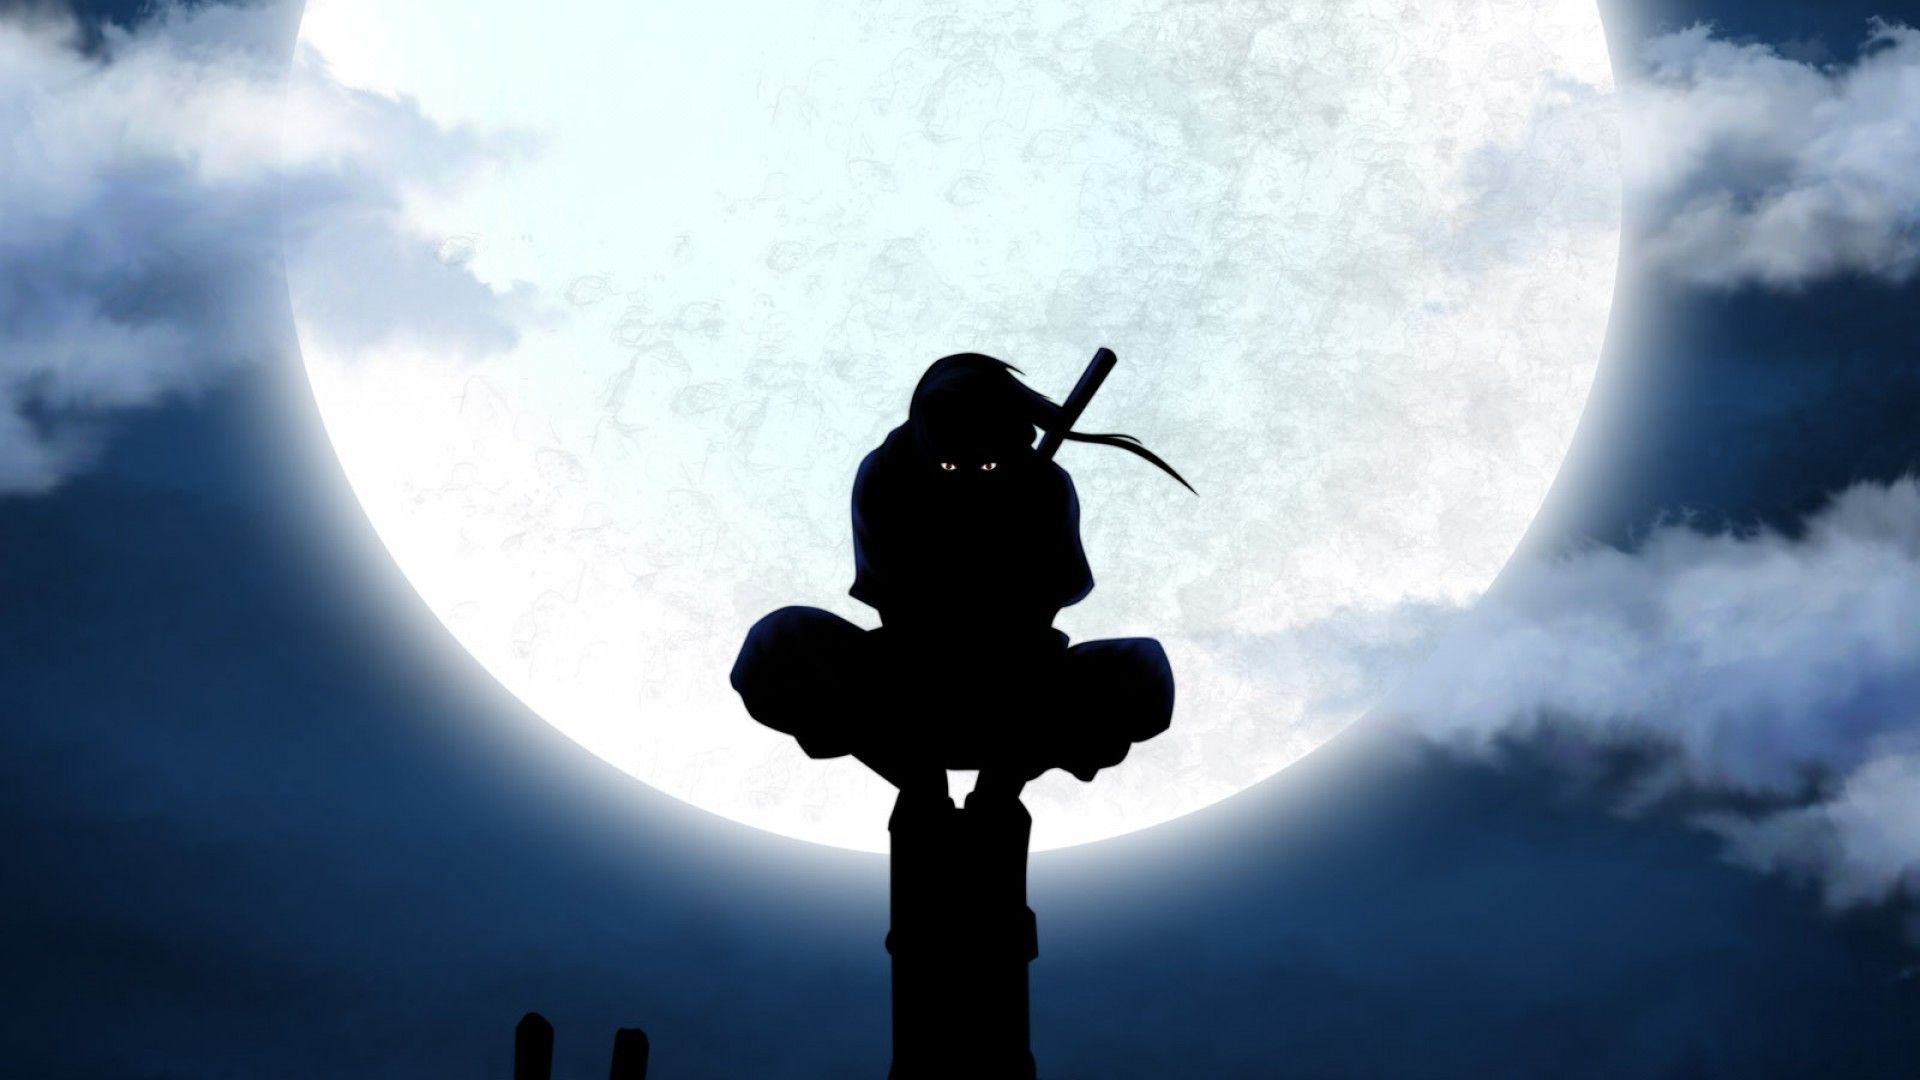 Creepy Anime Silhouette by zombi3land on DeviantArt